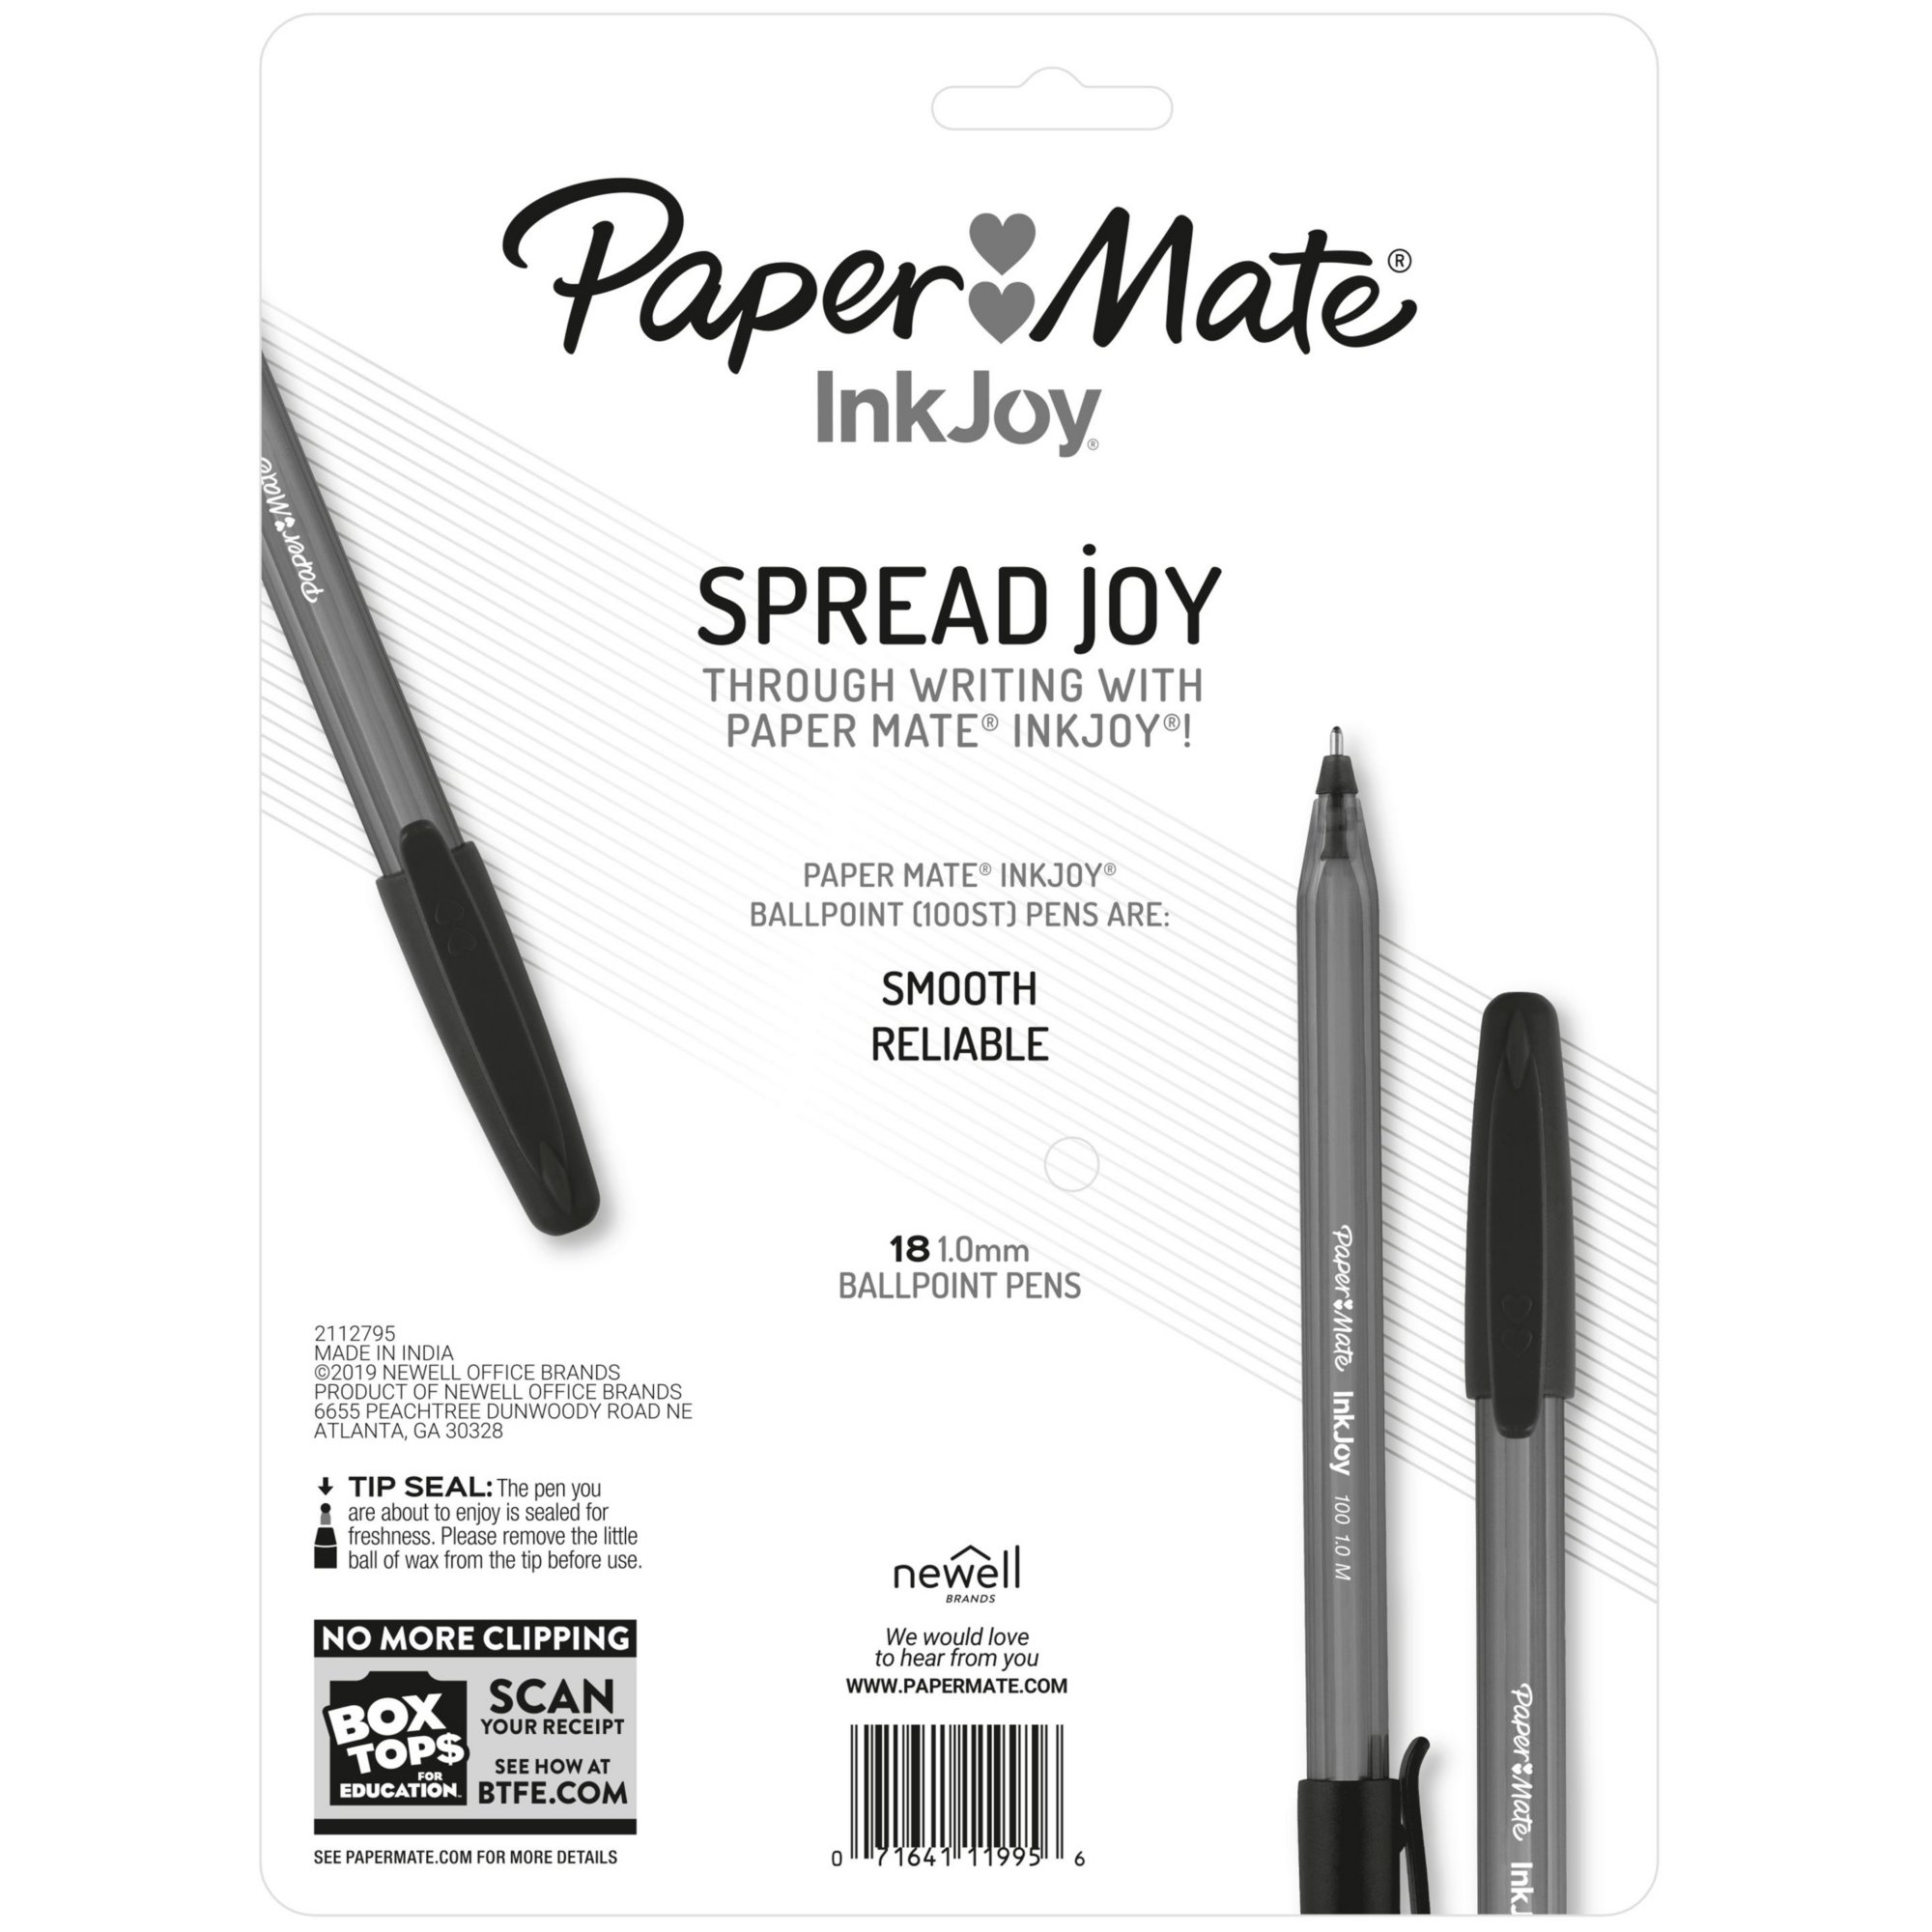 Paper Mate InkJoy 100ST Ballpoint Pens, Medium Point (1.0mm)